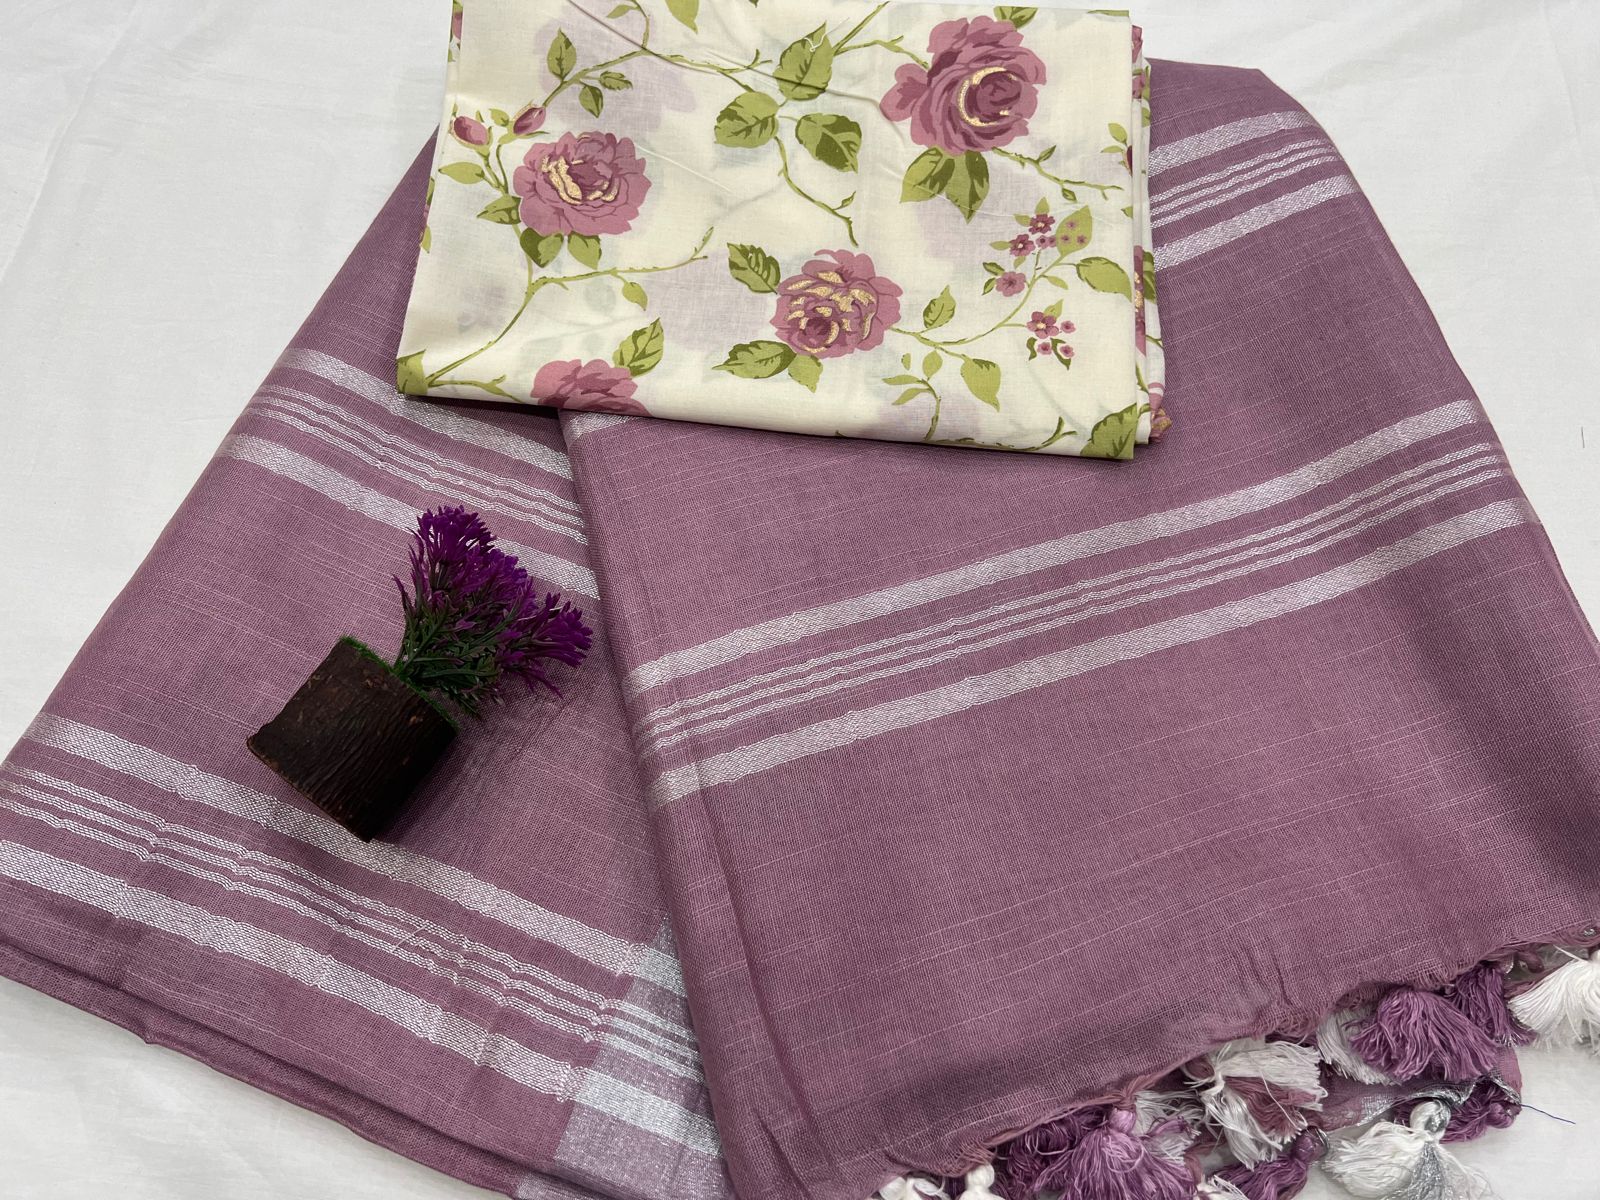 Mountbatten pink plain linen saree with cotton blouse